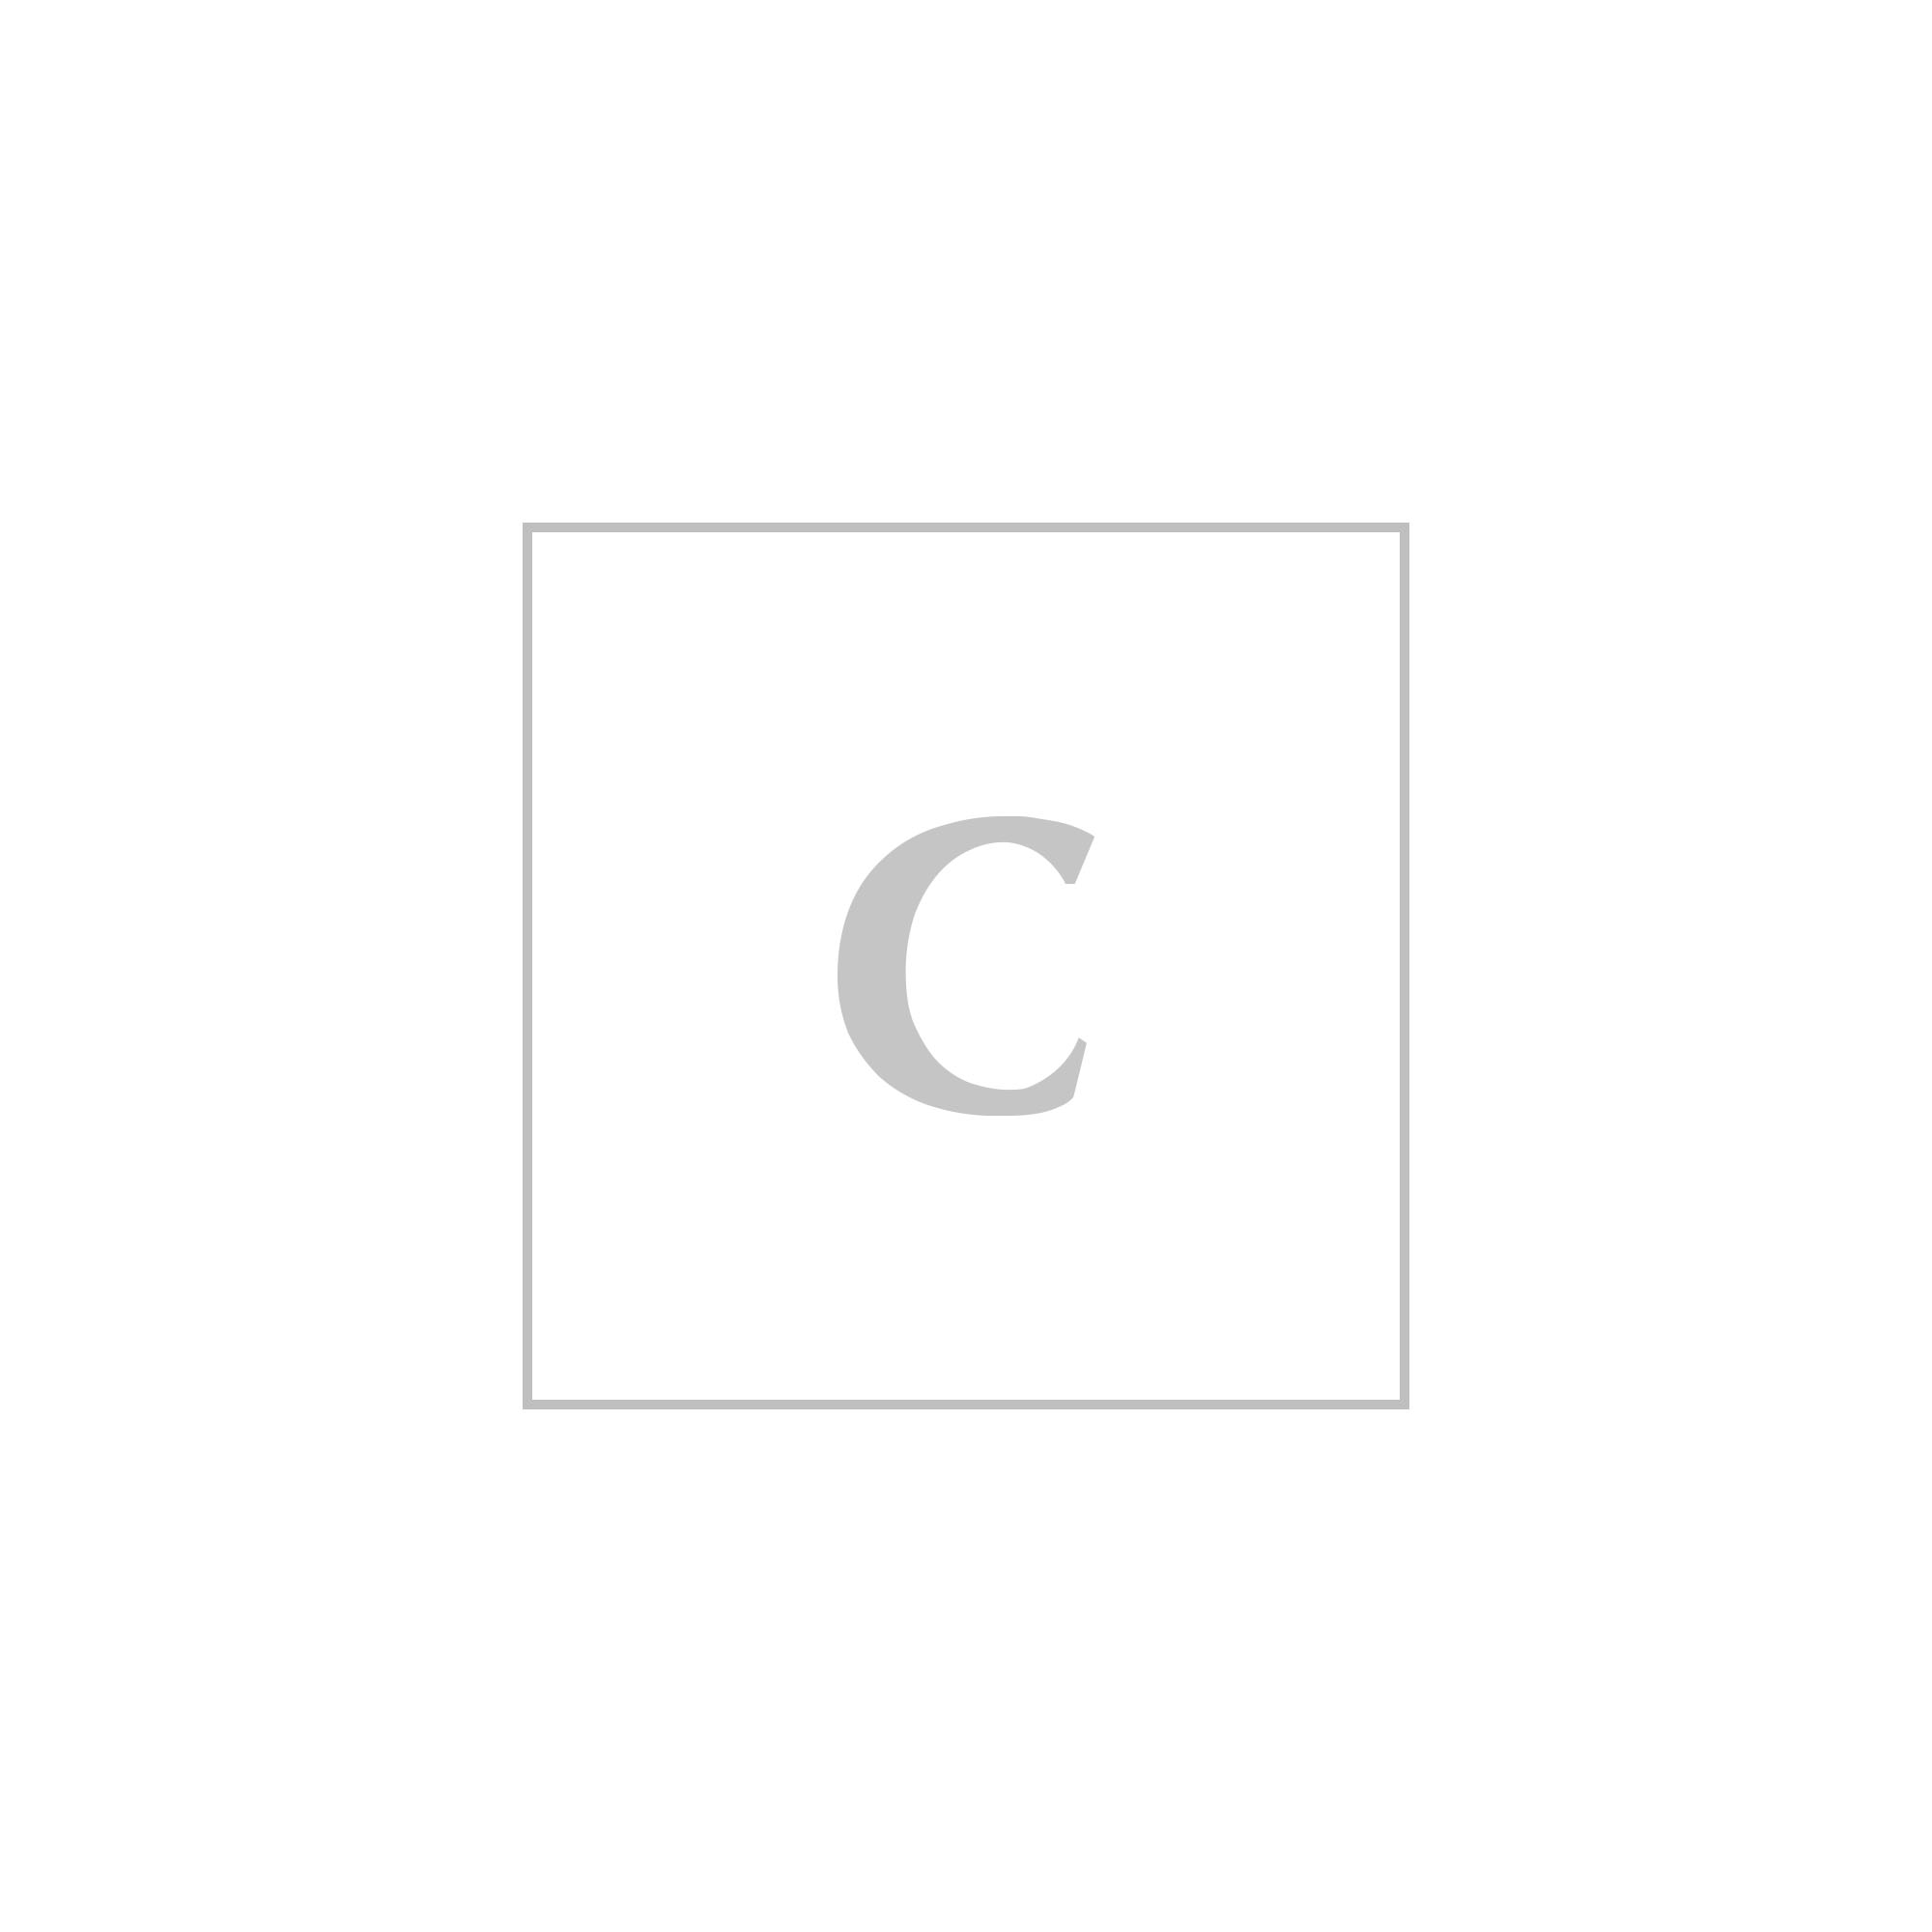 Michael Kors Logo Charm For Purse